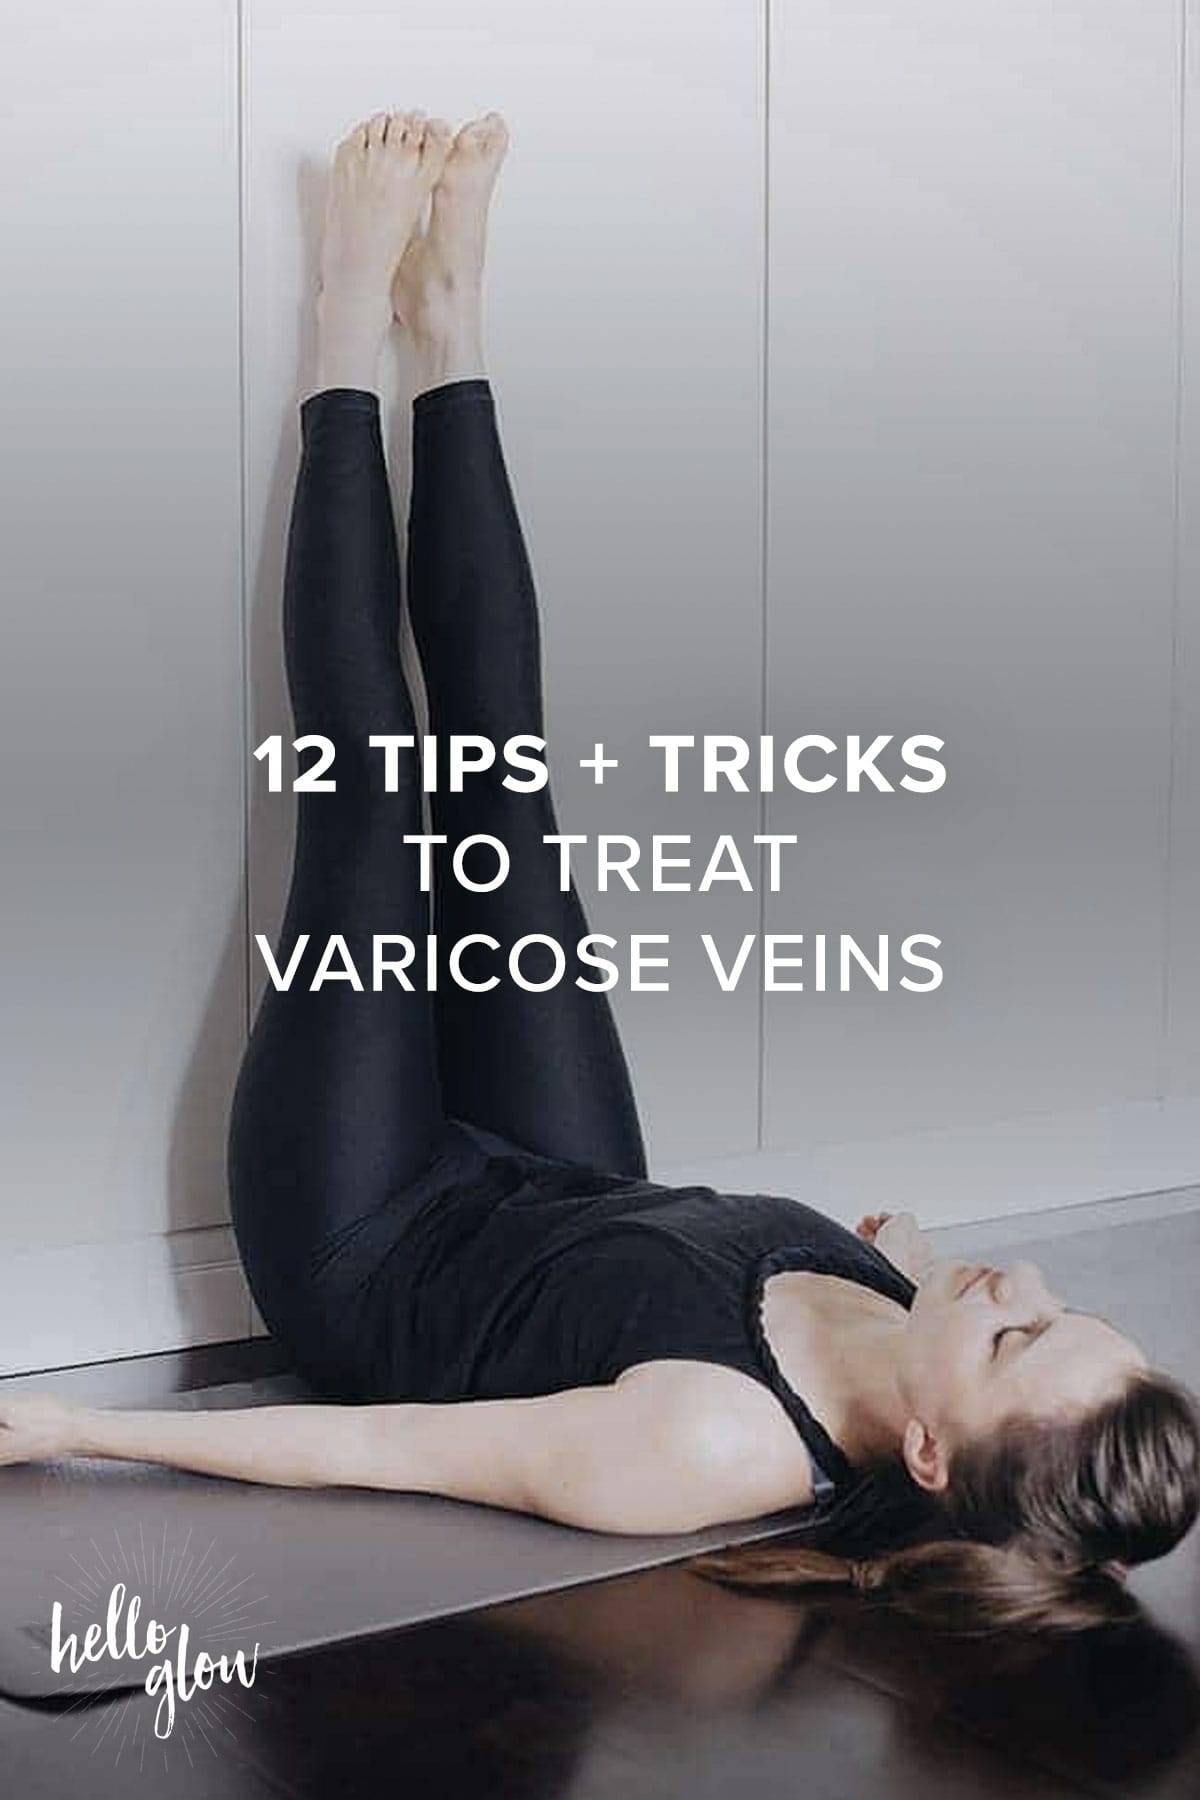 12 Tips + Tricks to Treat Varicose Veins